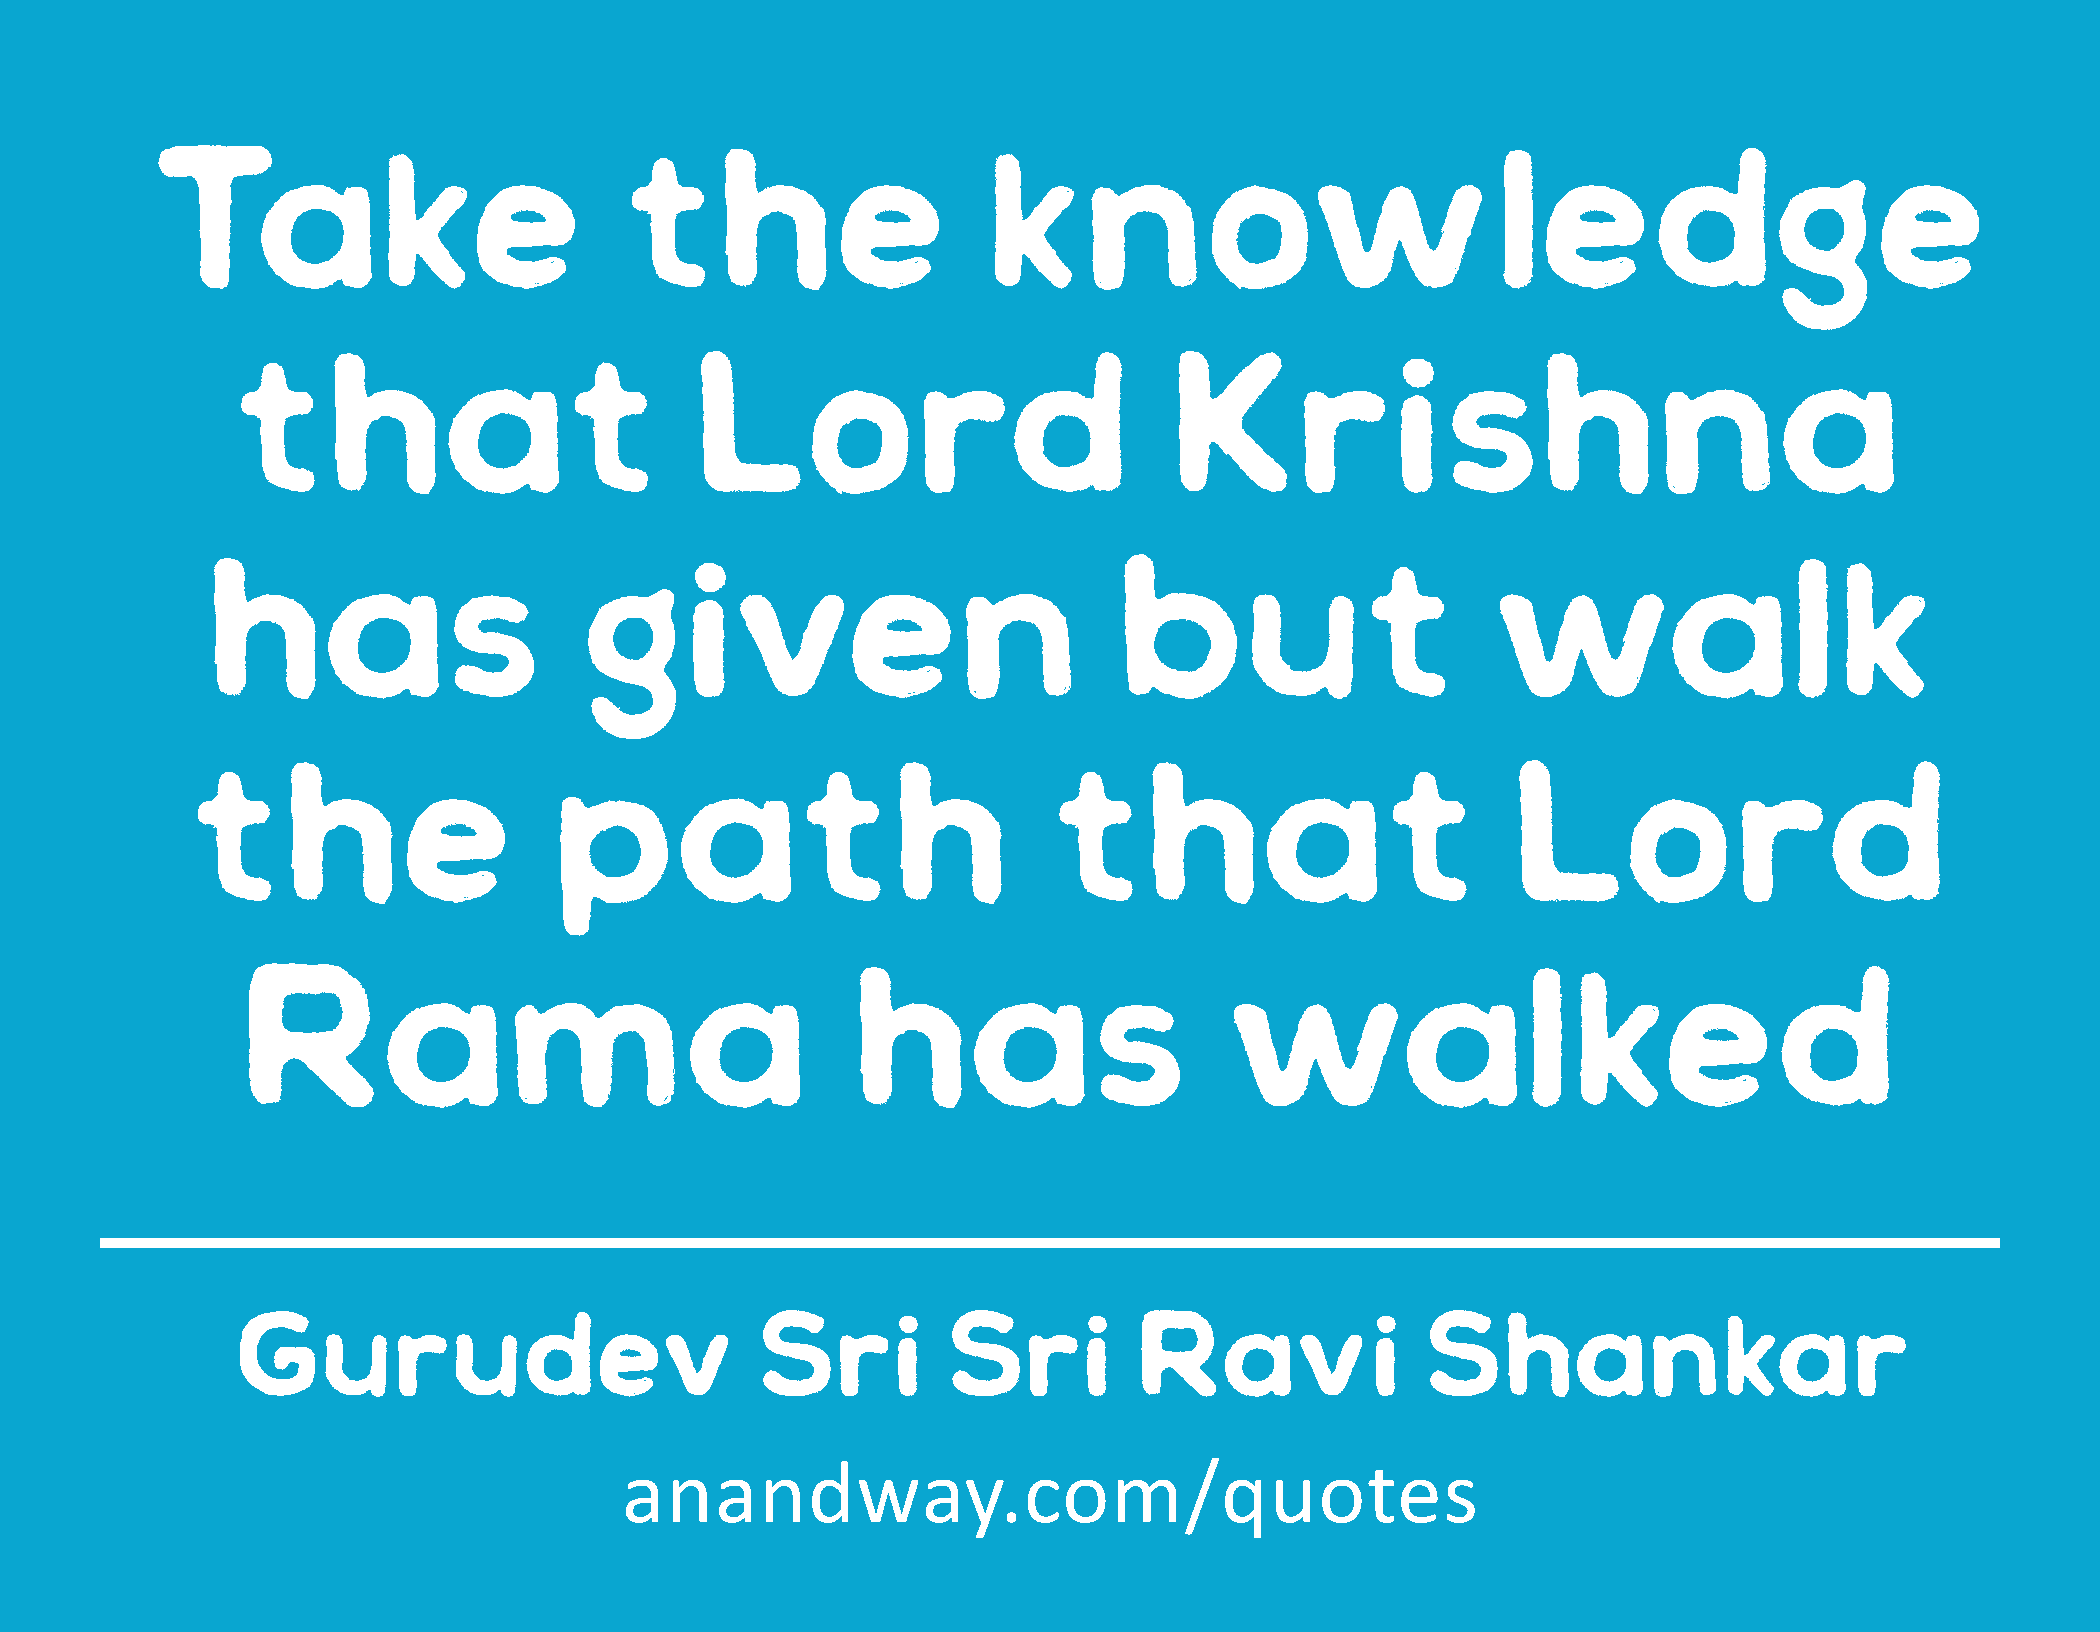 Take the knowledge that Lord Krishna has given but walk the path that Lord Rama has walked 
 -Gurudev Sri Sri Ravi Shankar